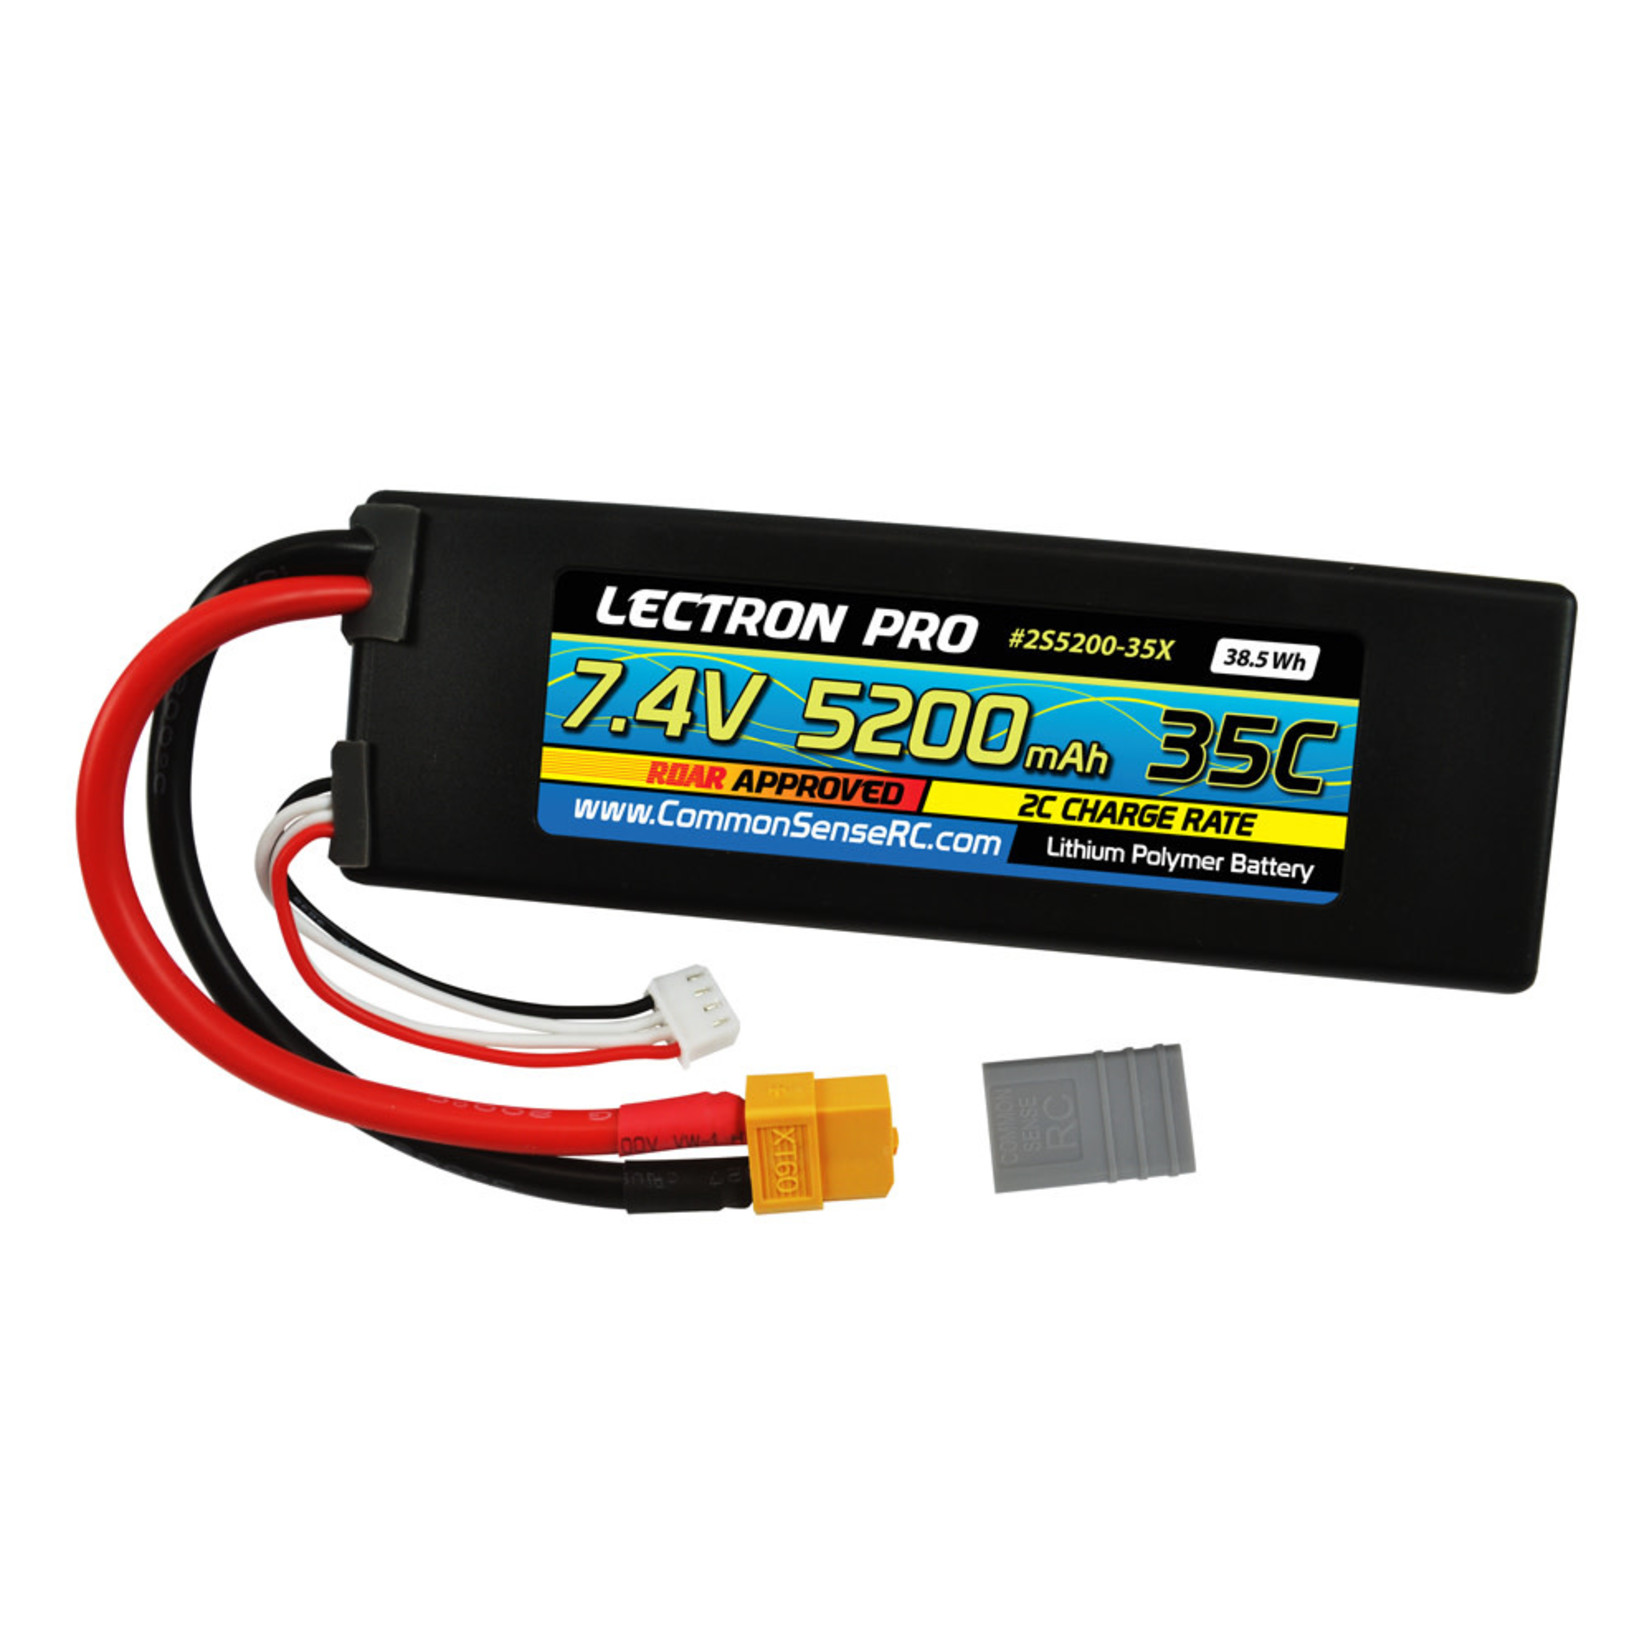 Common Sense RC Common Sense RC Lectron Pro 7.4V 5200mAh 35c Lipo Battery w/XT60 connector and adaptor